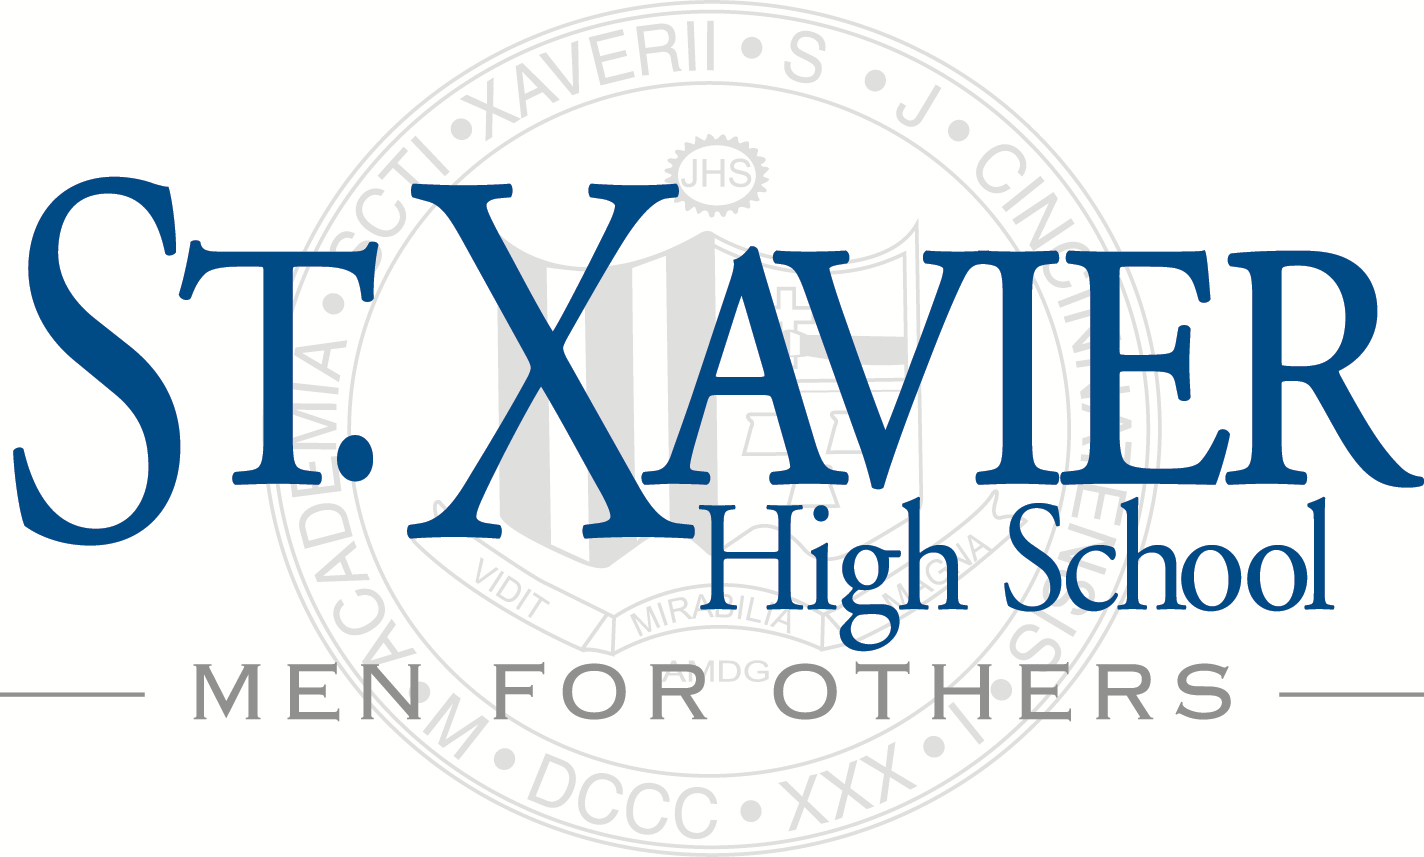 St. Xavier High School - Cincinnati, OH